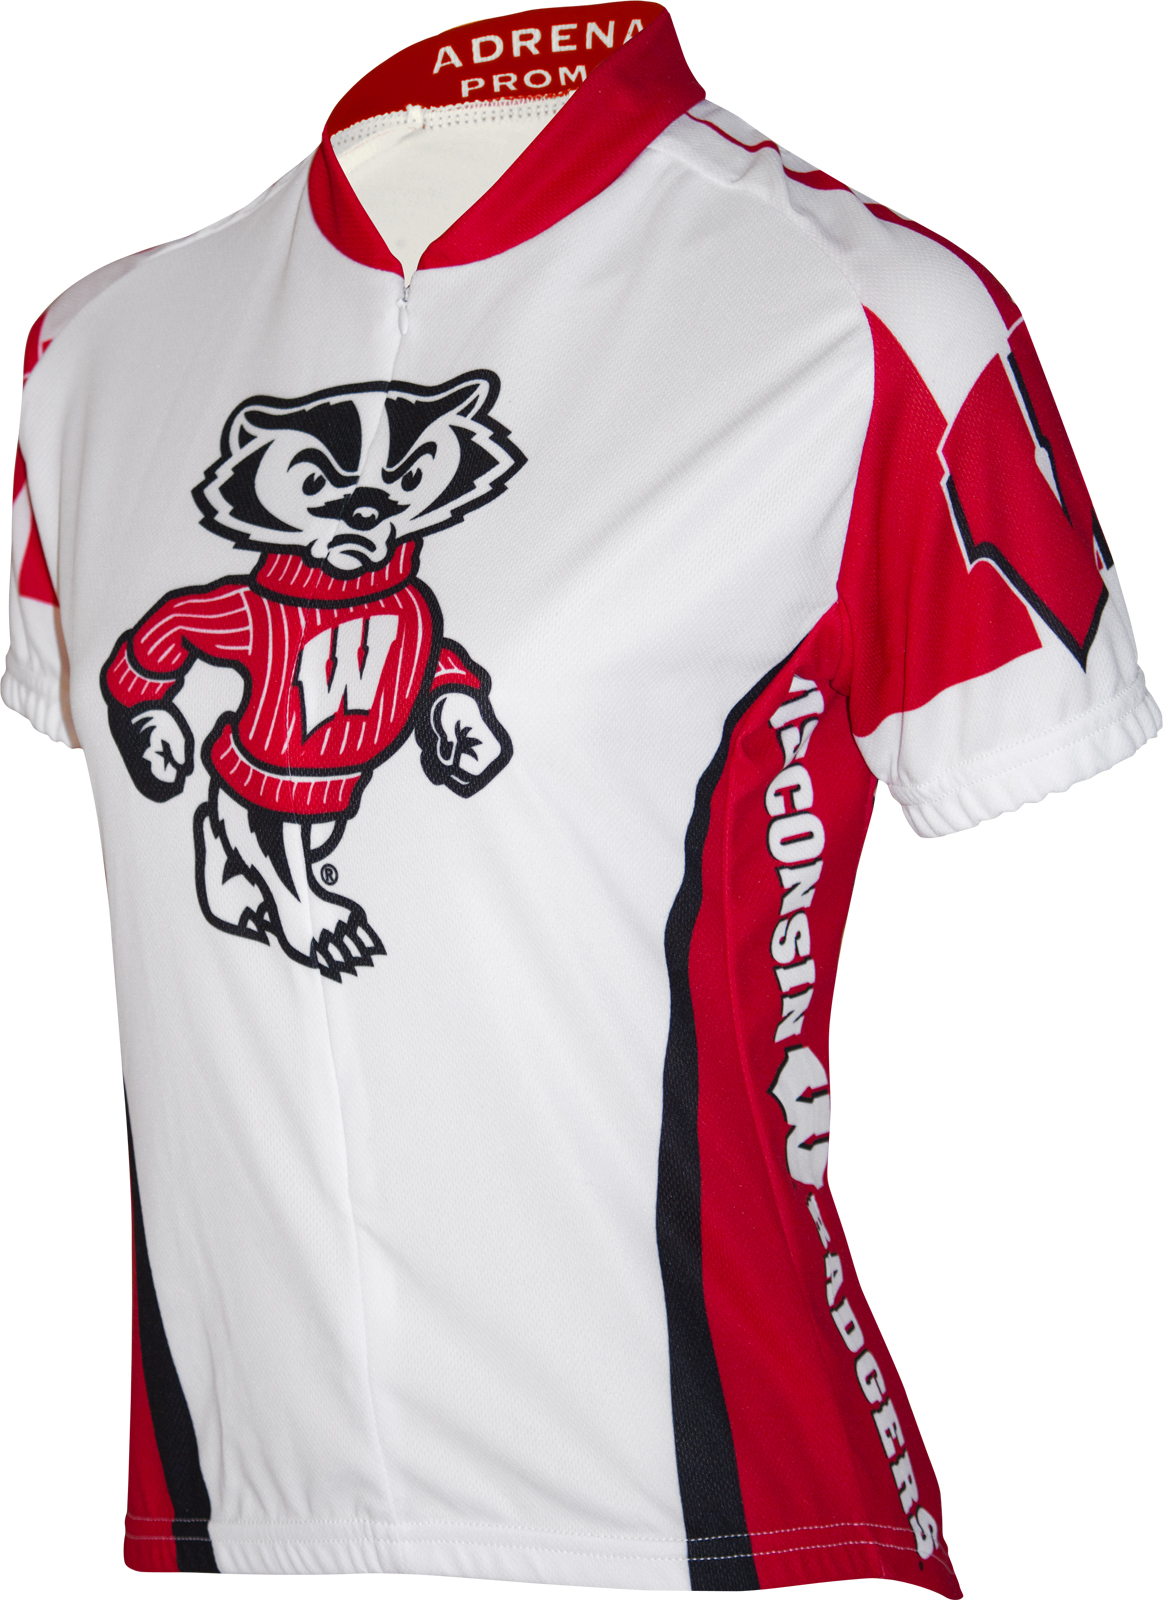 University of Wisconsin Badgers Women's Cycling Jersey